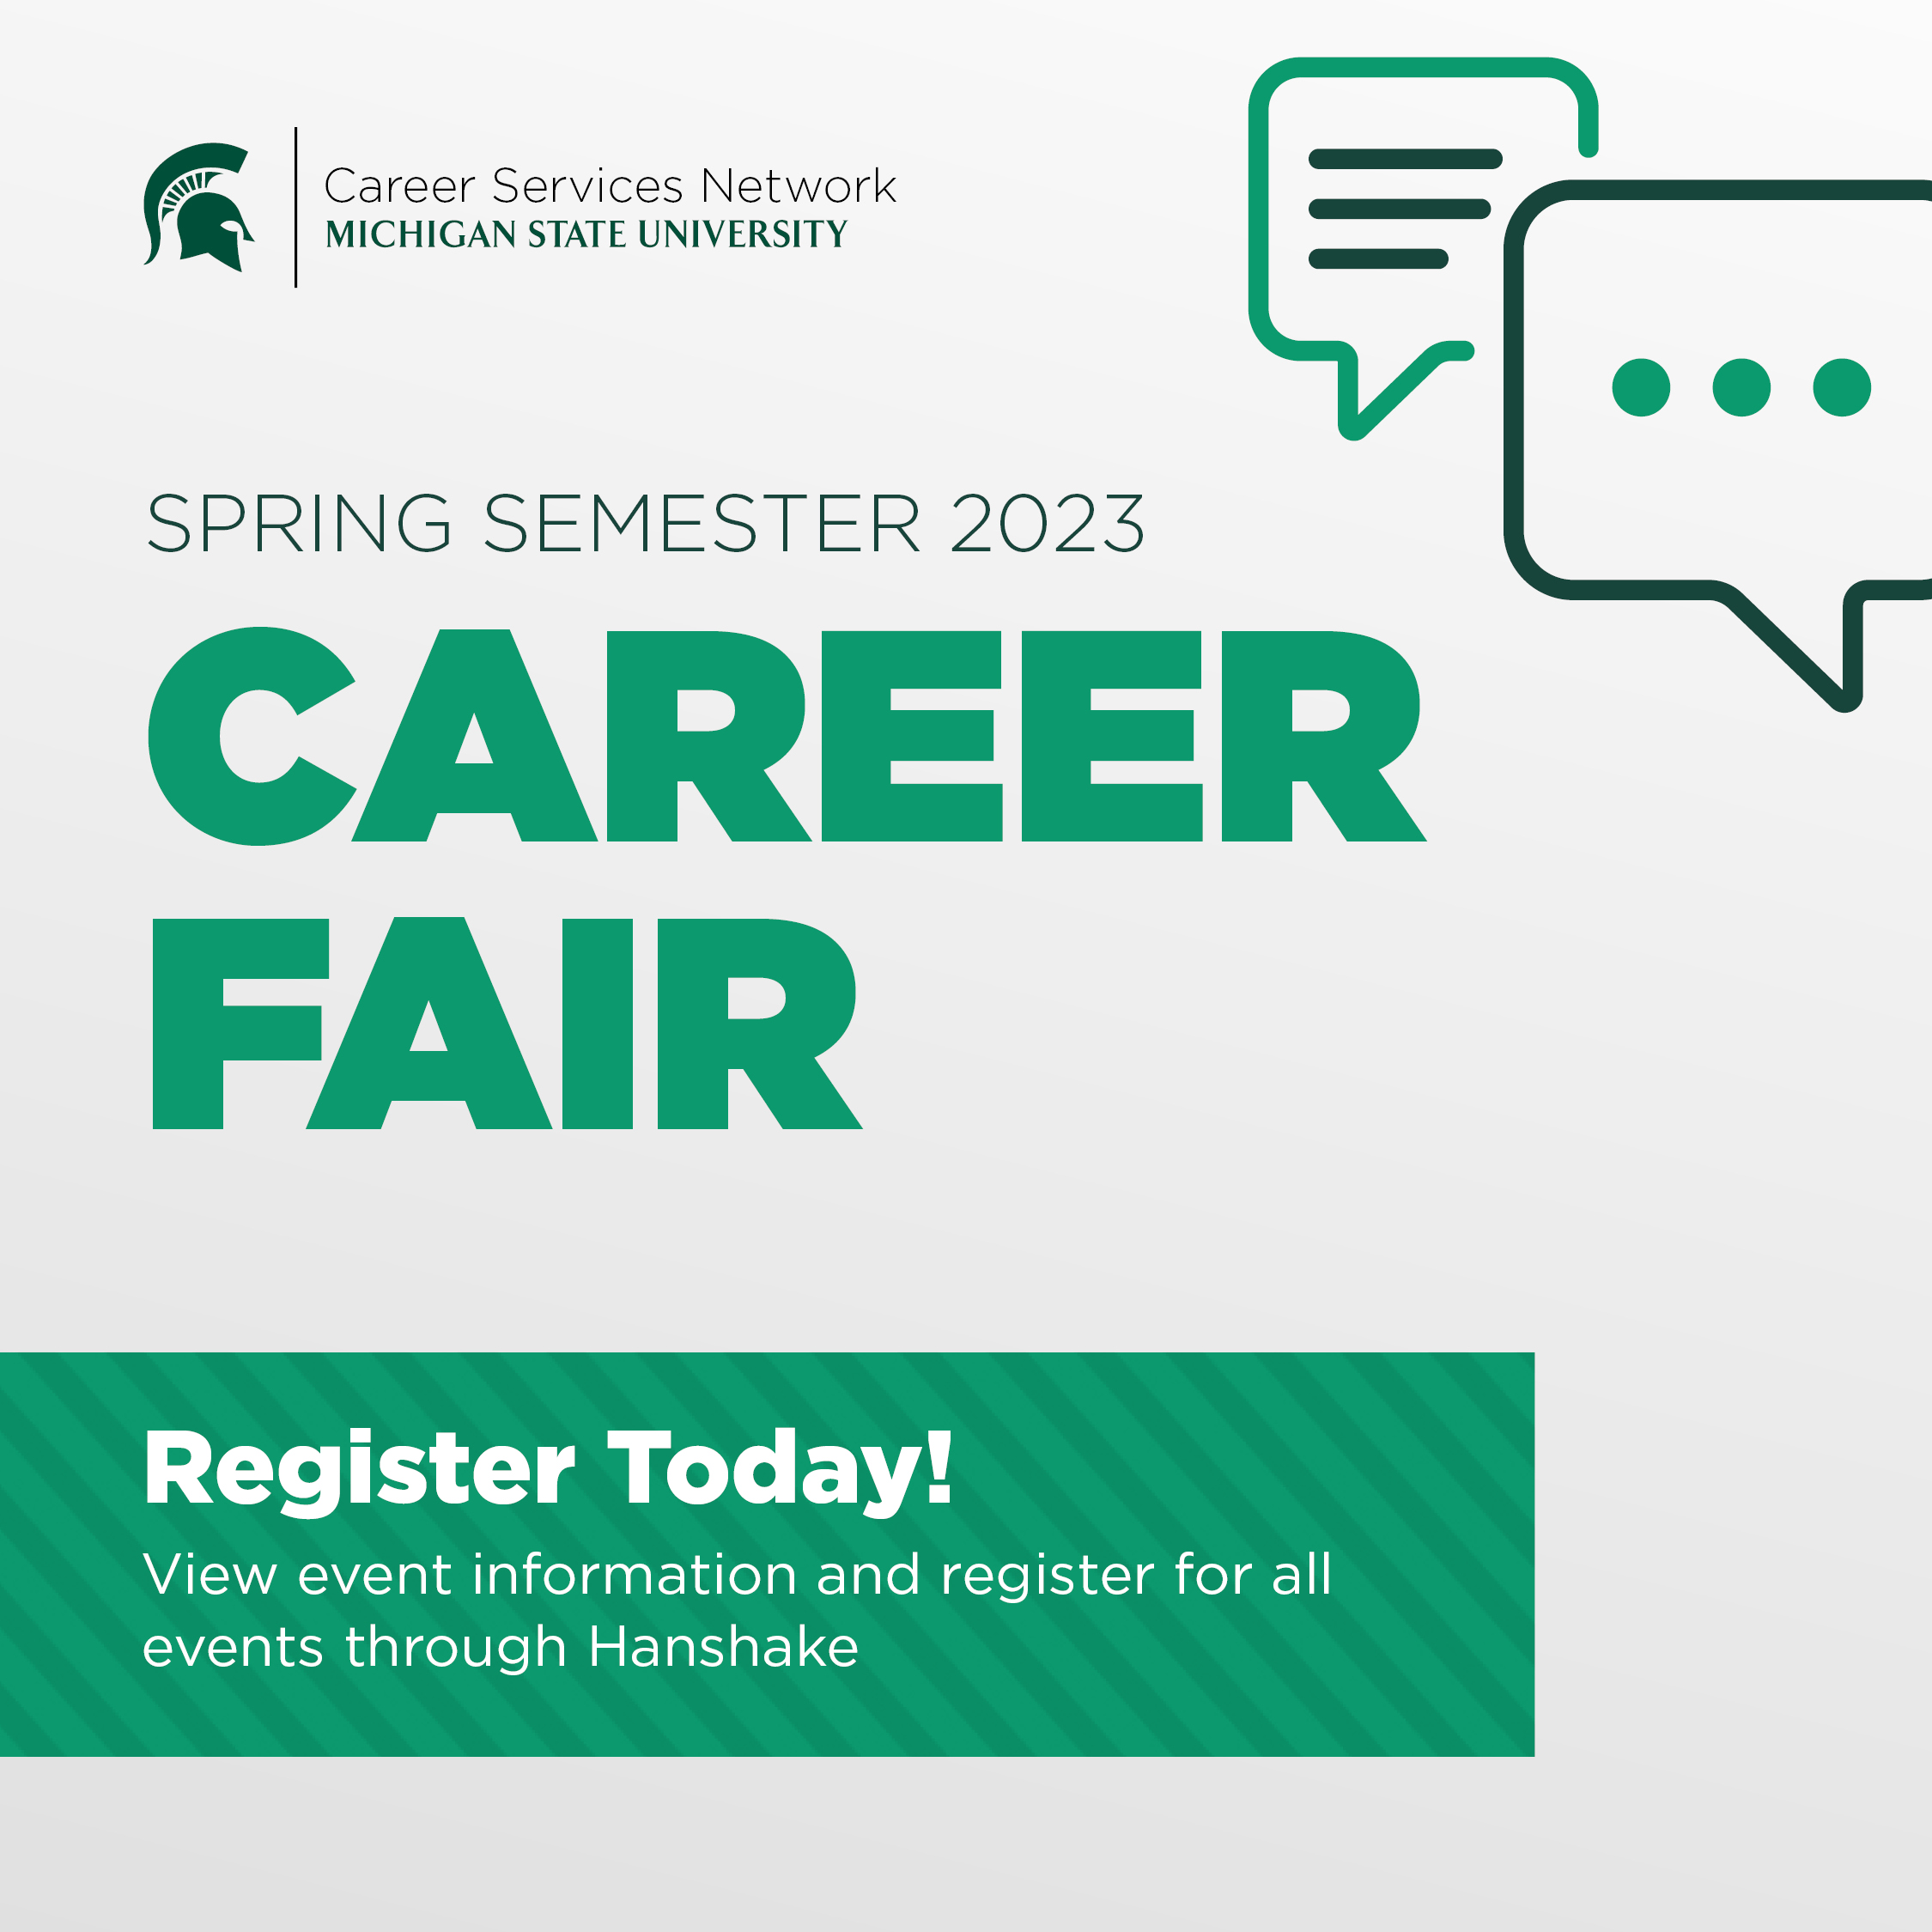 Spring Semester '23 Career Fairs start March 13